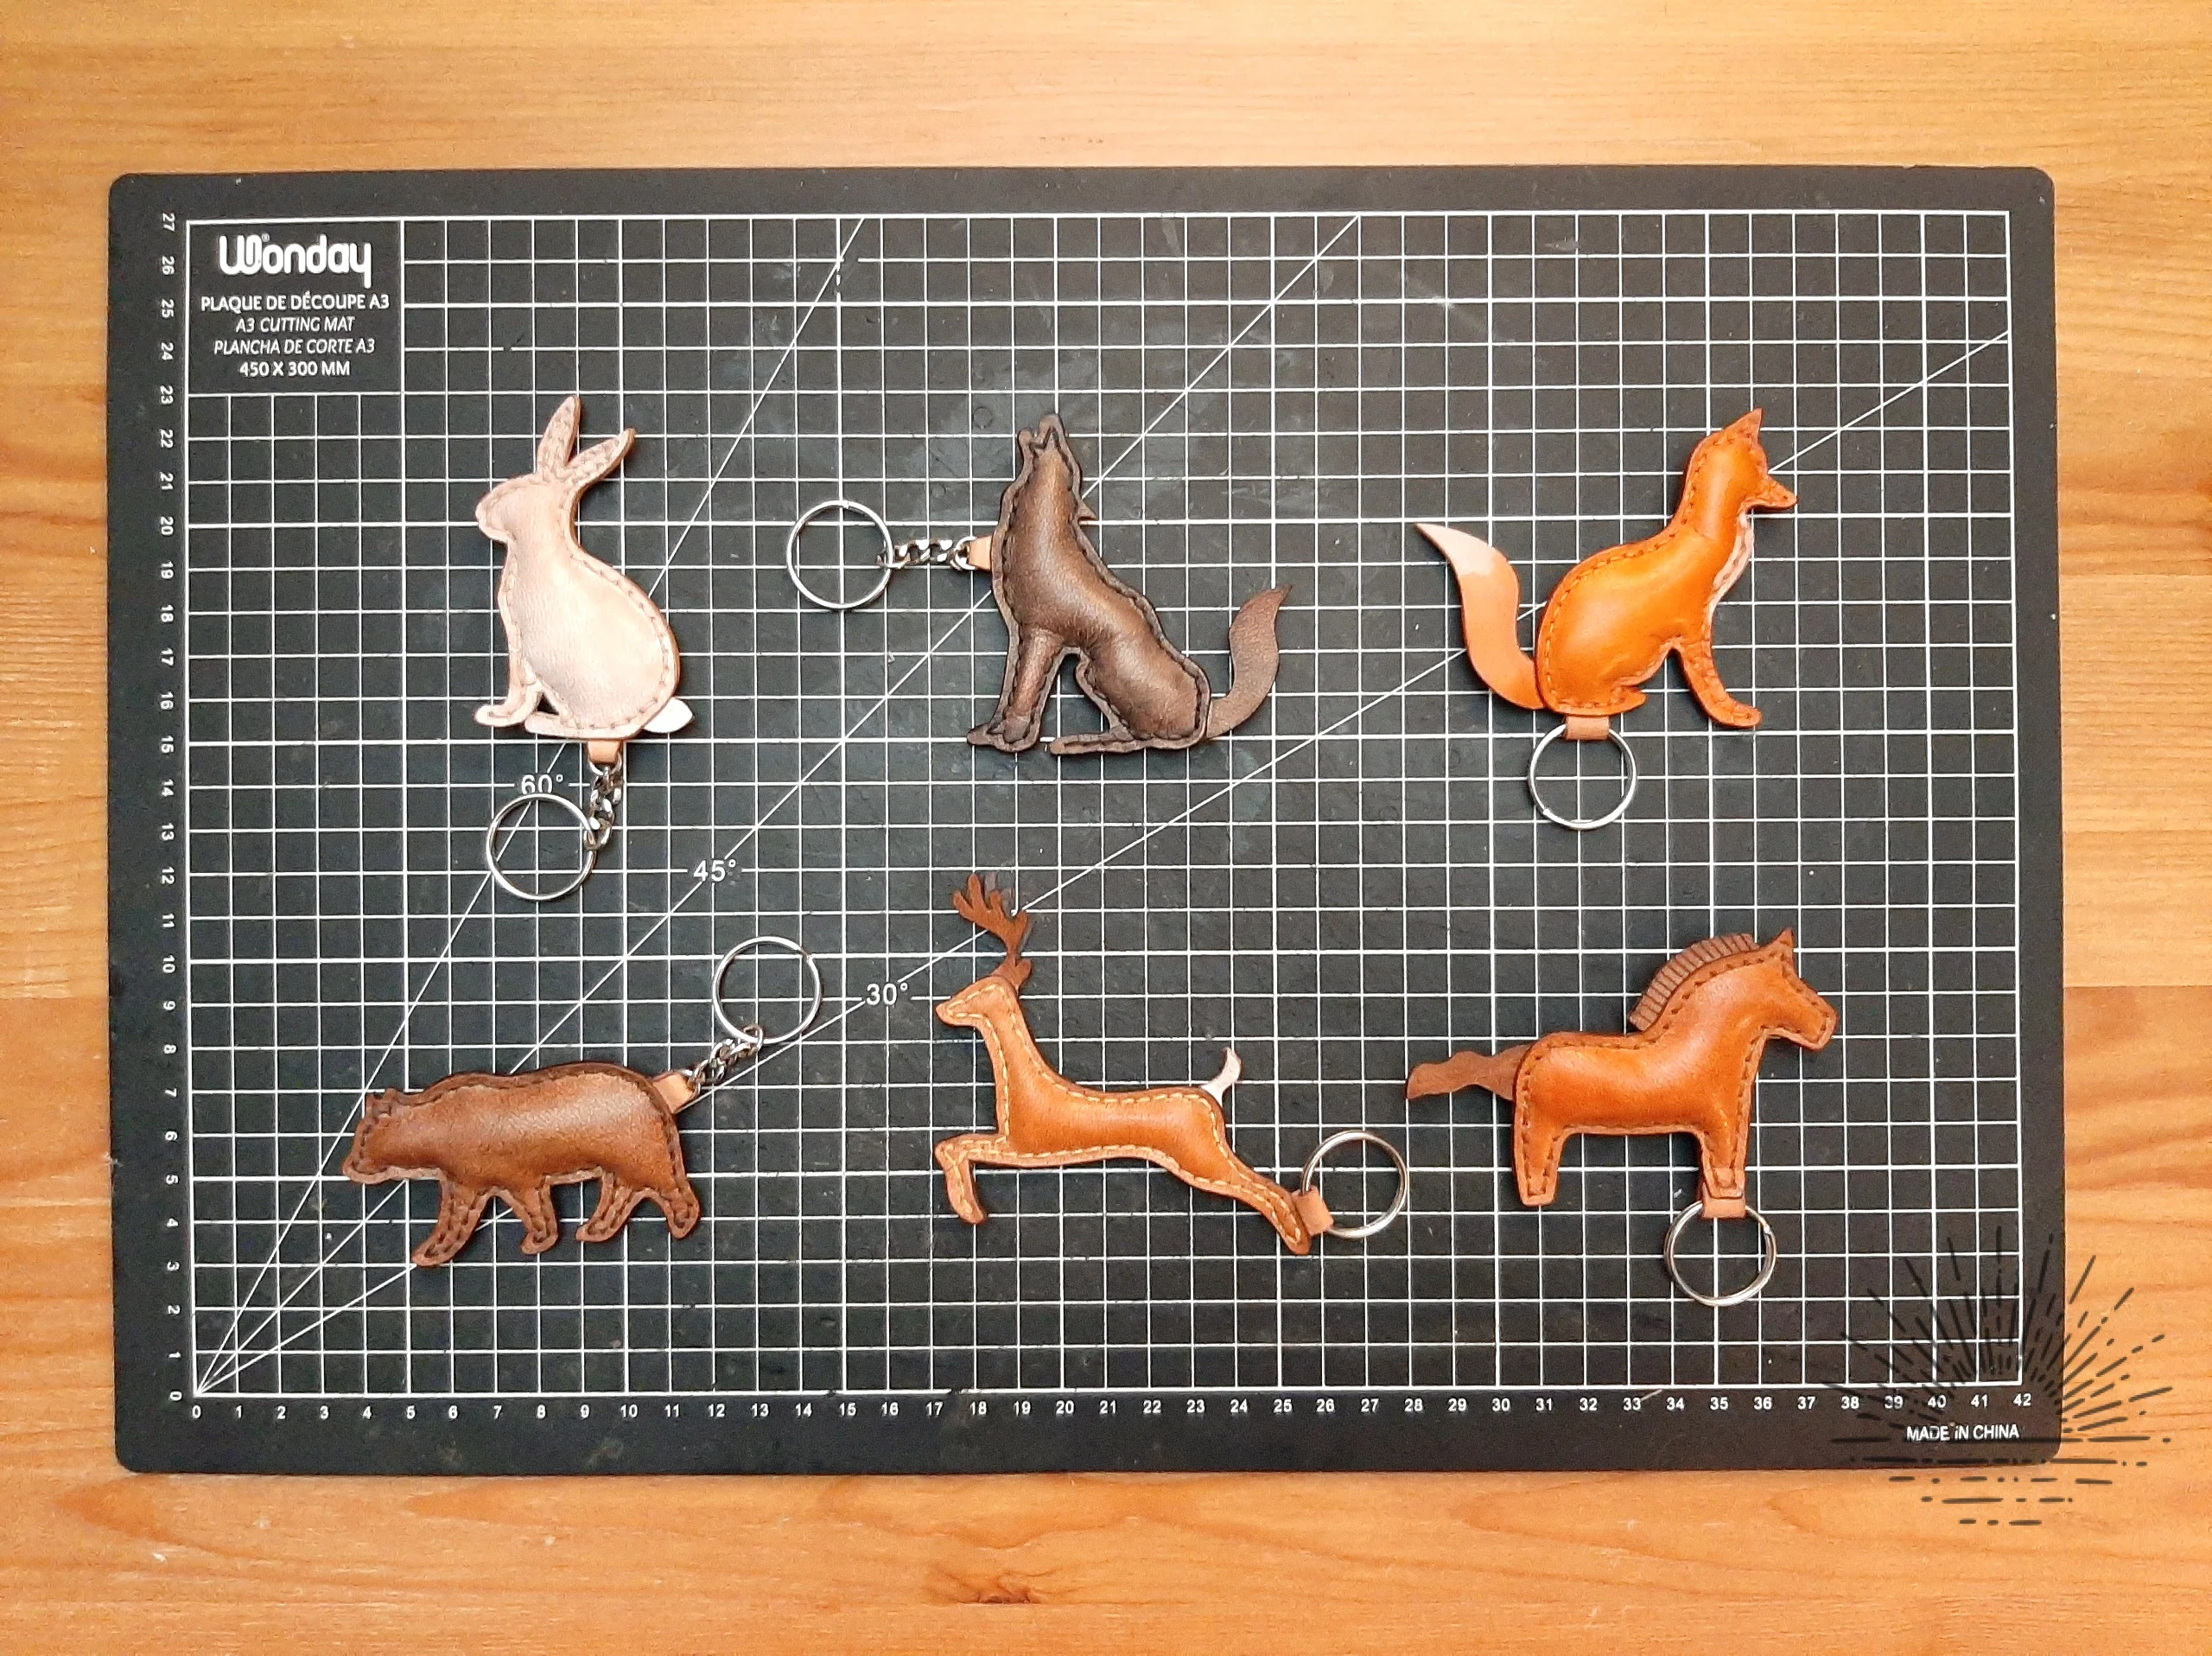 How to Make A Leather Mini Animal Key Charm?